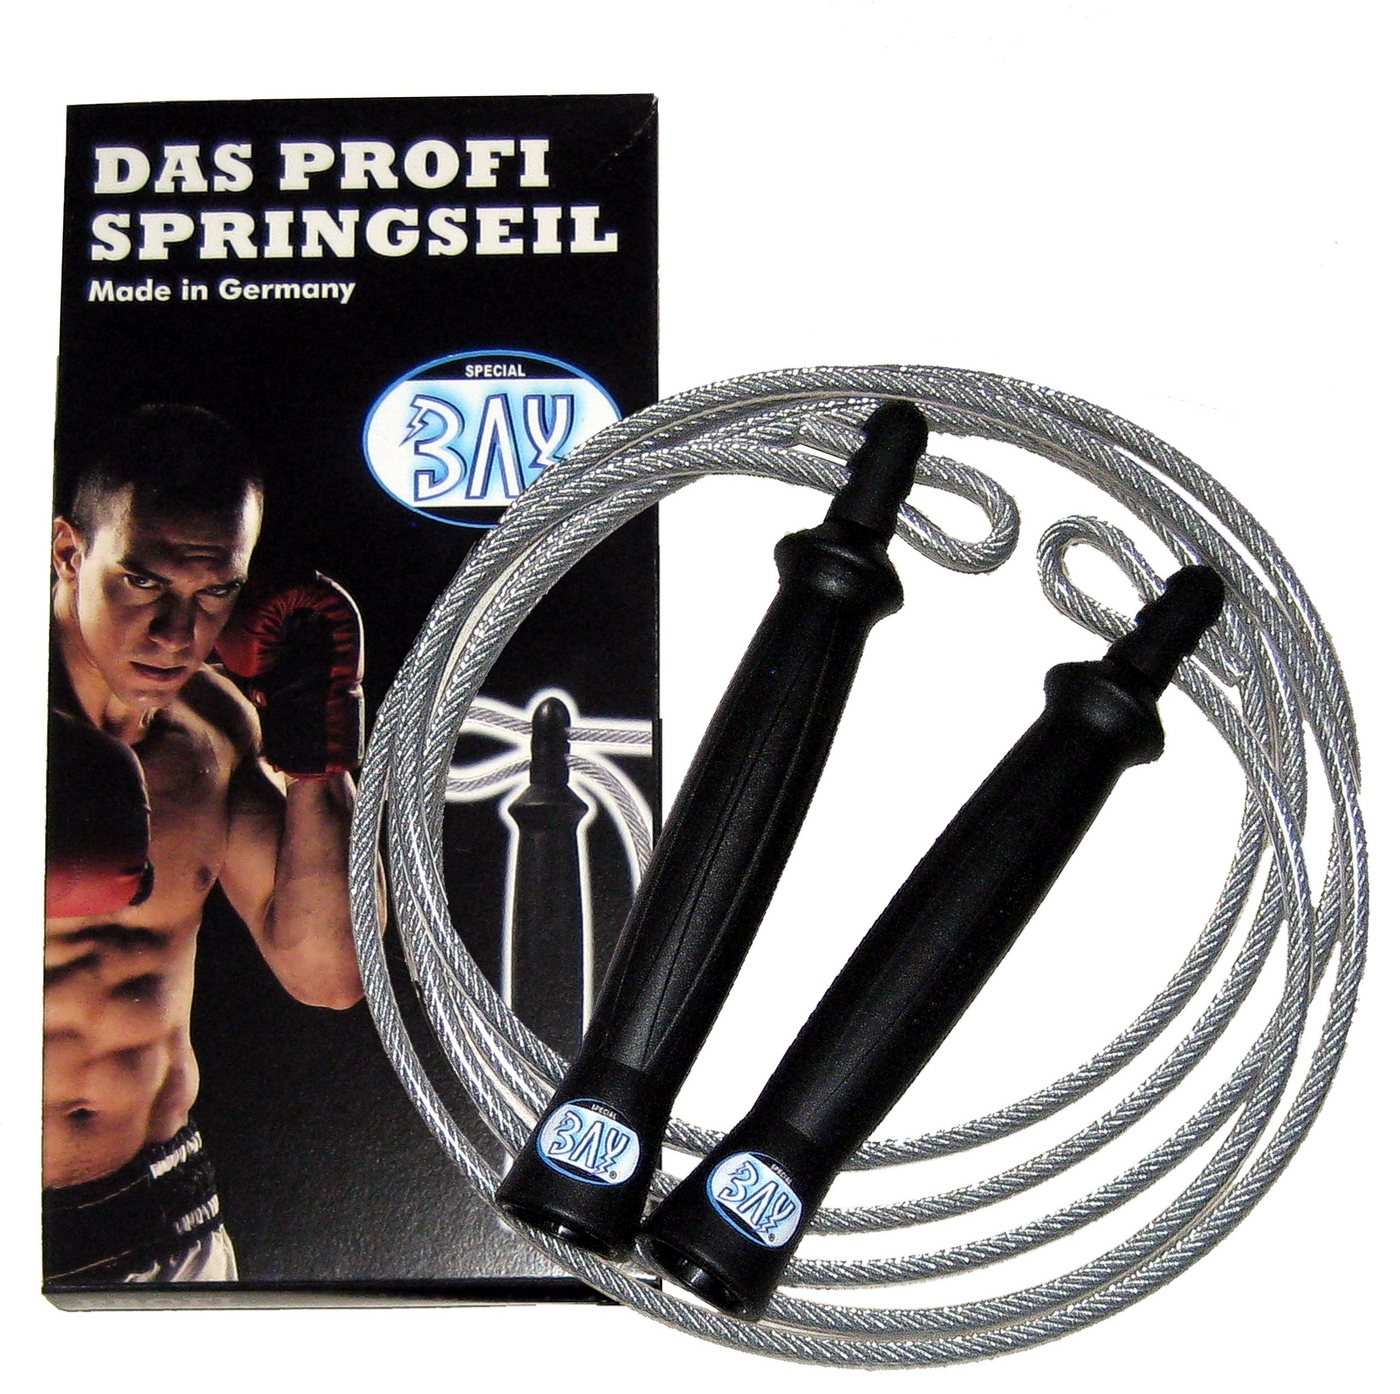 BAY-Sports Springseil Made in Germany DELUX 280 Stahl Seele Sprungseil High Speed PVC Mantel, Längenverstellbar - MADE IN GERMANY Prägung von BAY-Sports